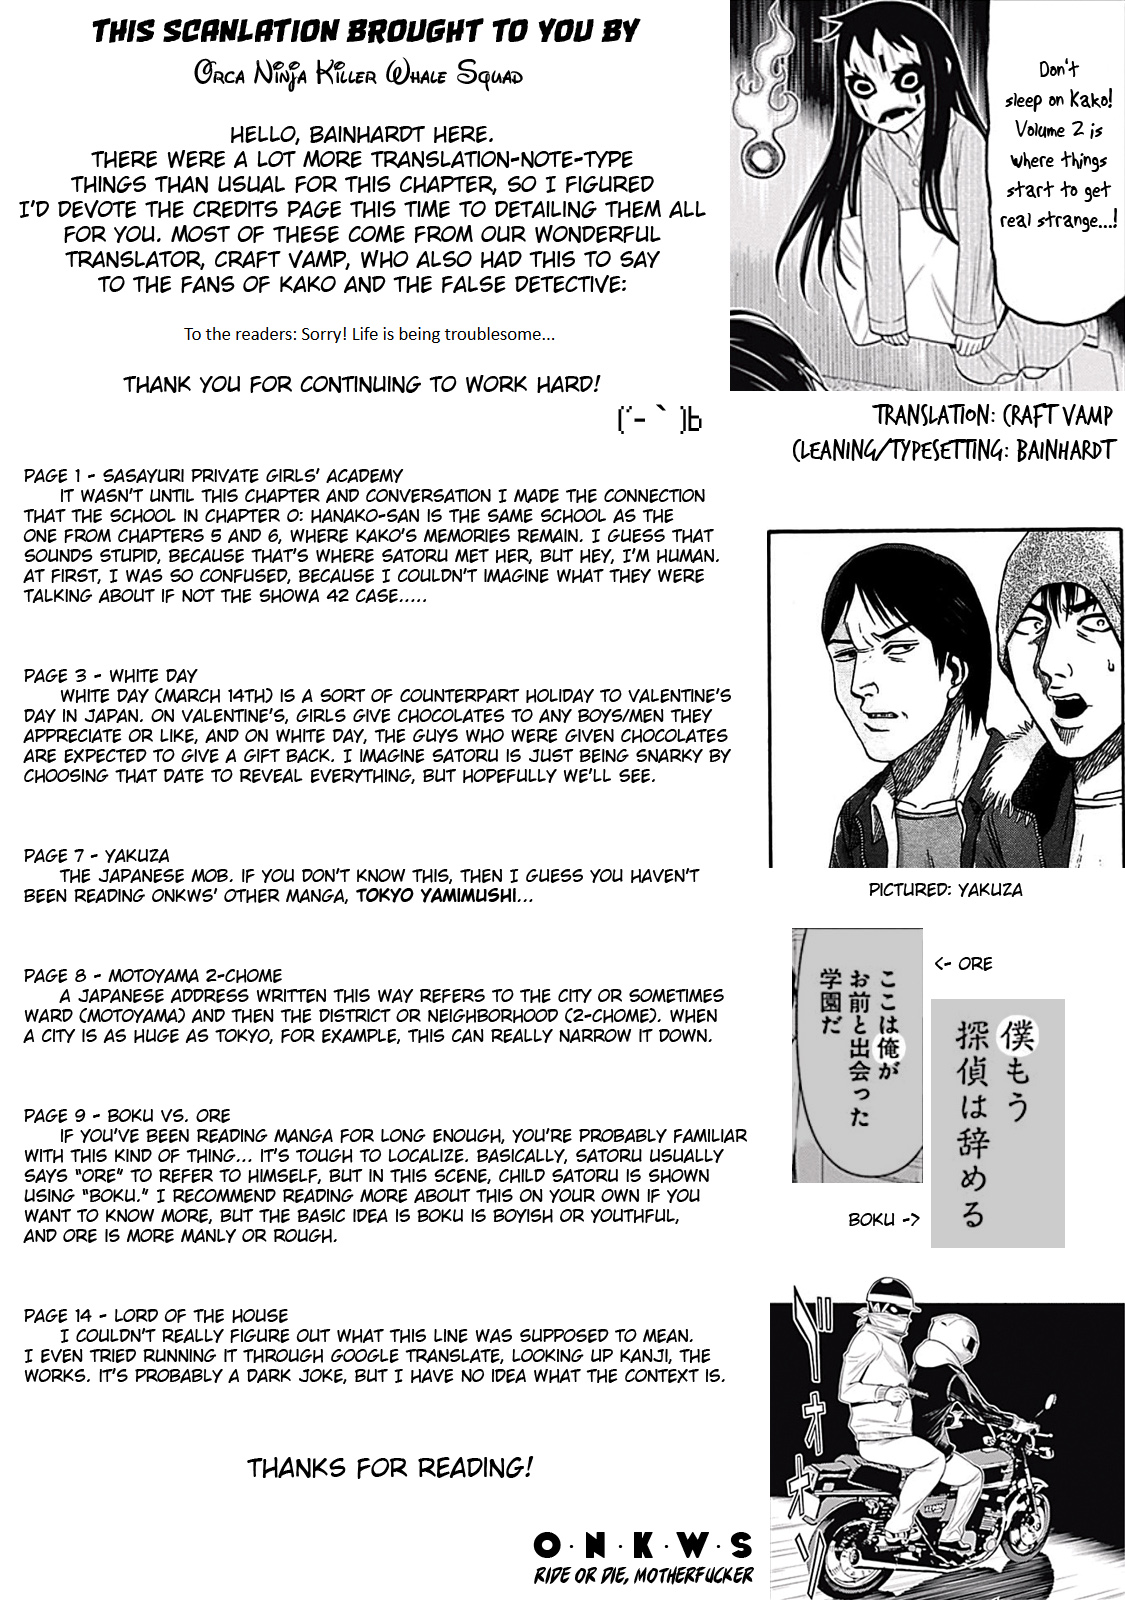 Kako and the False Detective Vol.2 Ch.7